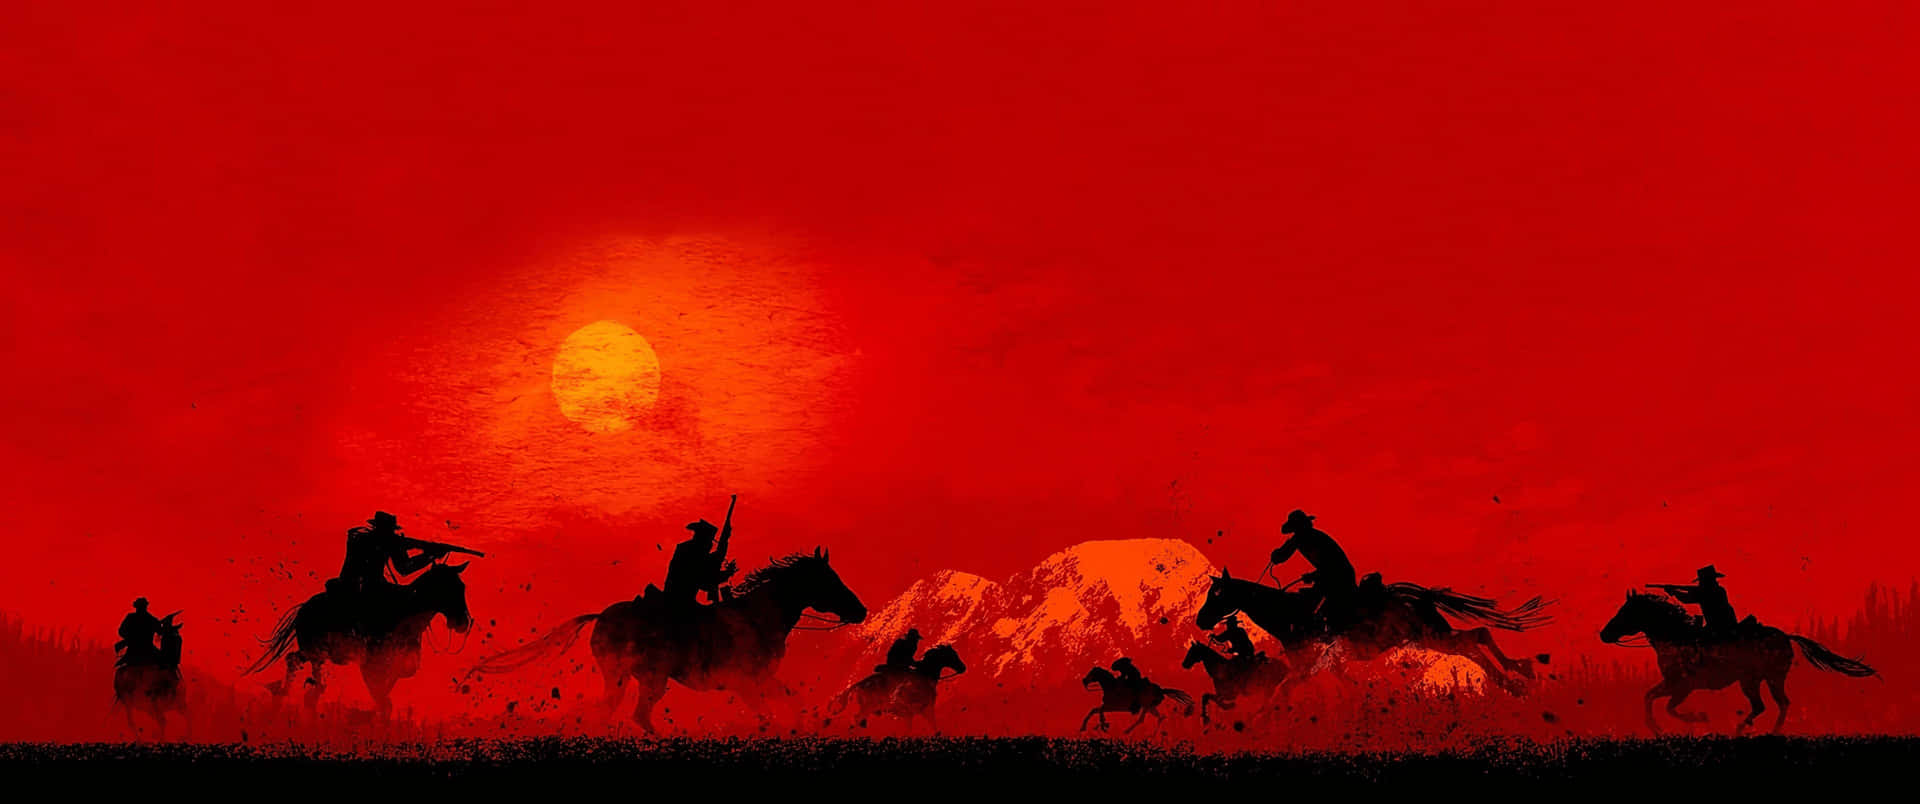 3440x1440p Red Dead Redemption 2 Background Horse Background